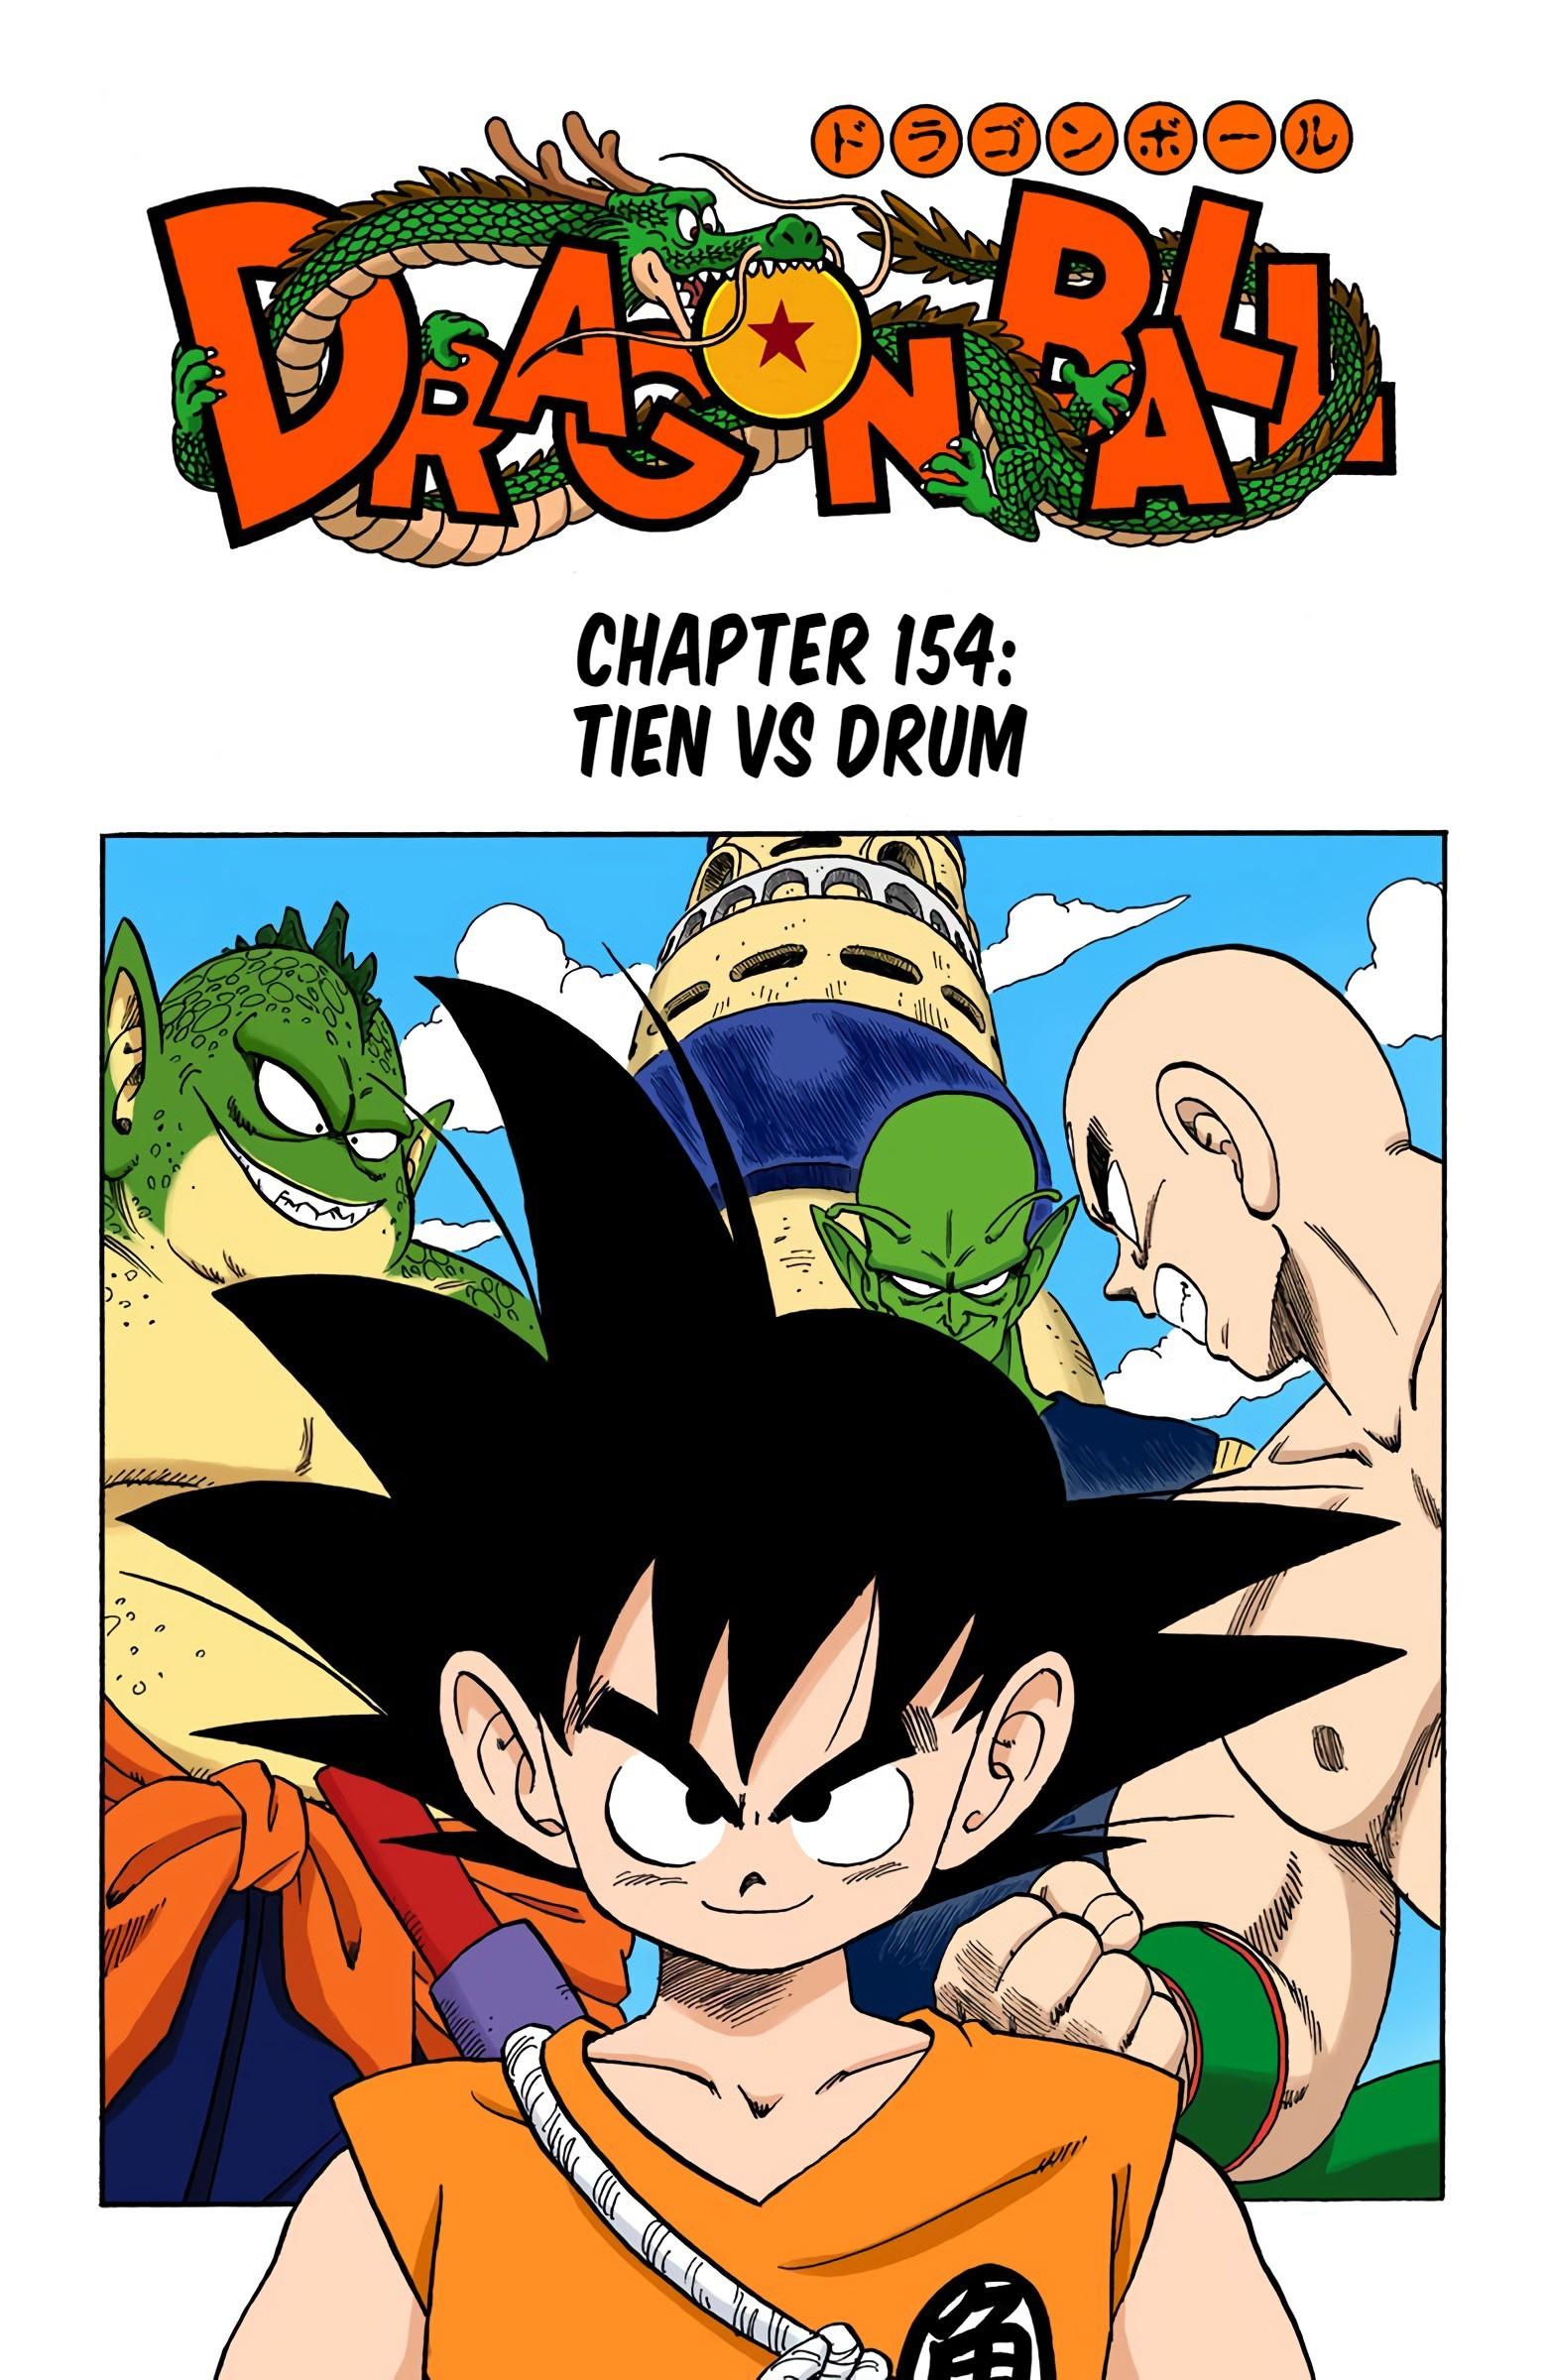 Dragon Ball Super – Color Manga - Chapter 73 - Manga Rock Team - Read Manga  Online For Free